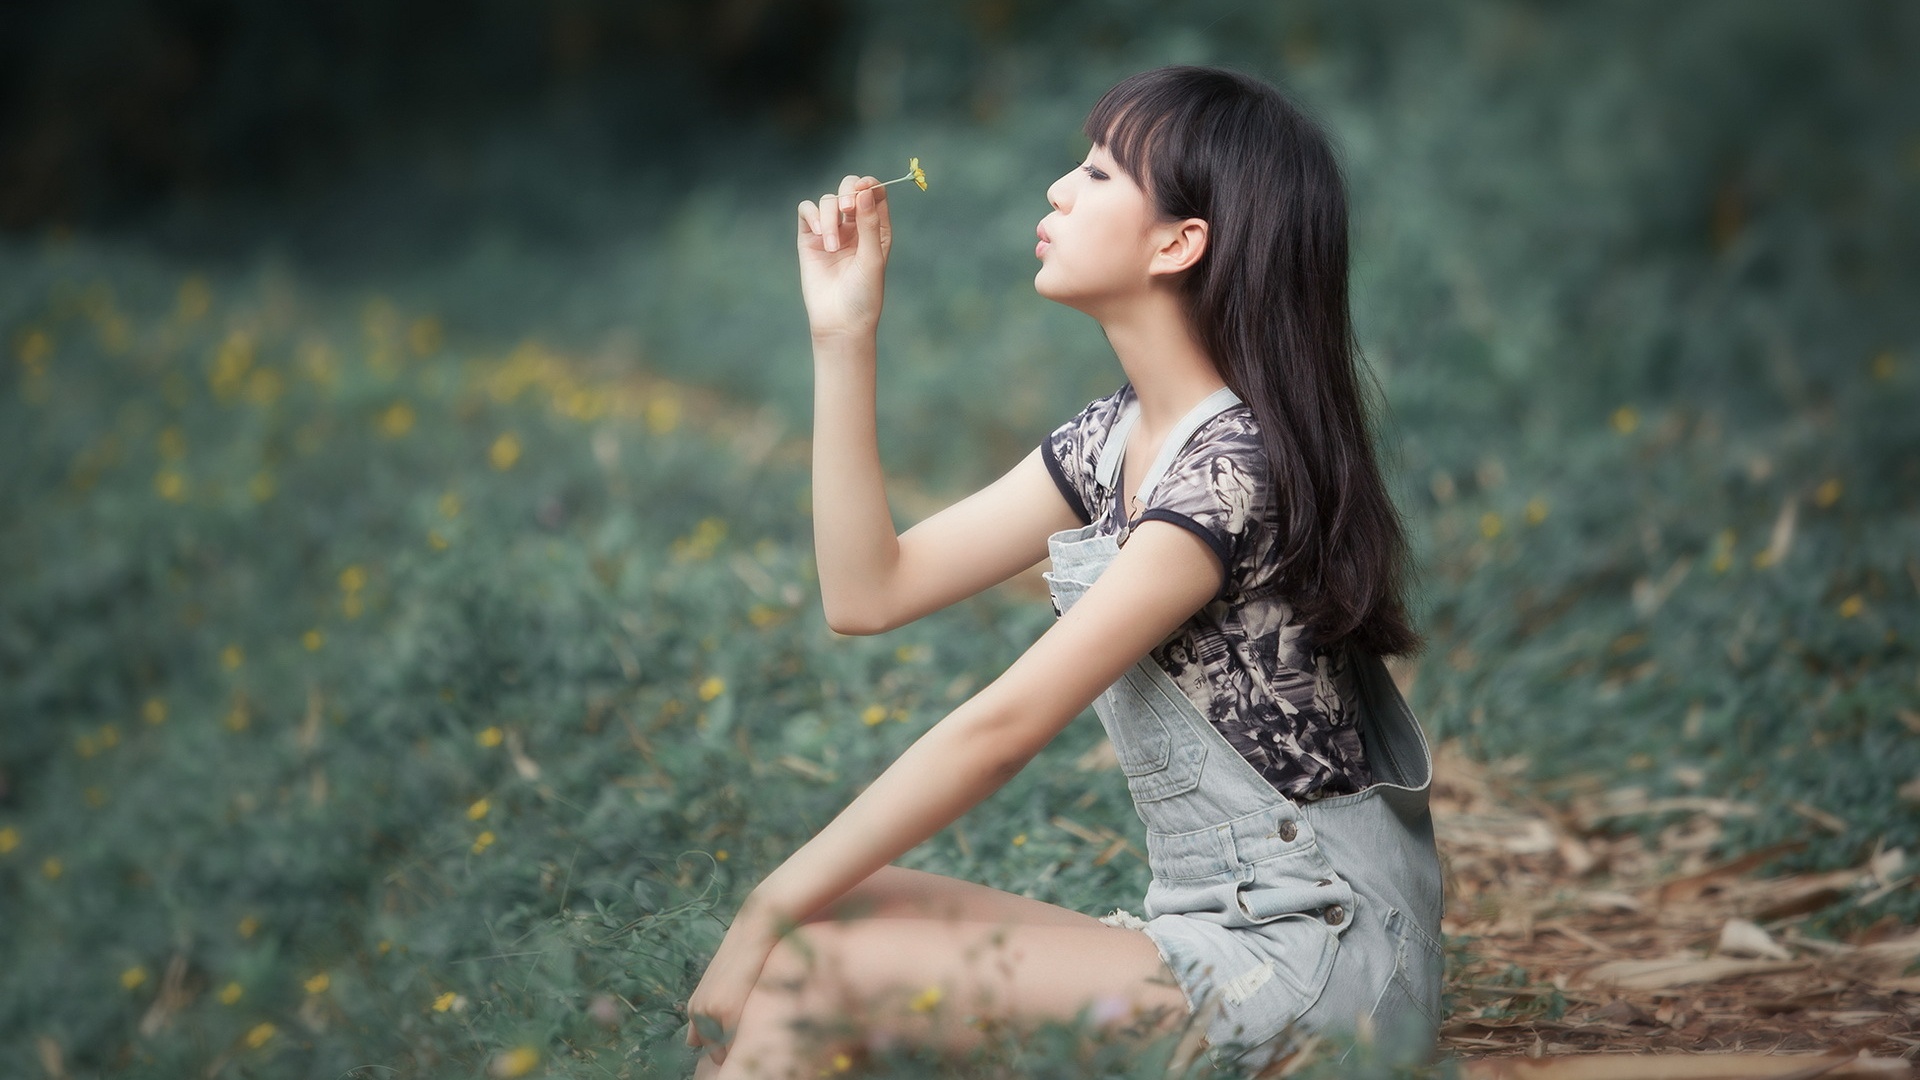 Women Asian Photography Model Long Hair Women Outdoors Dandelion Brunette Side View T Shirt Closed E 1920x1080